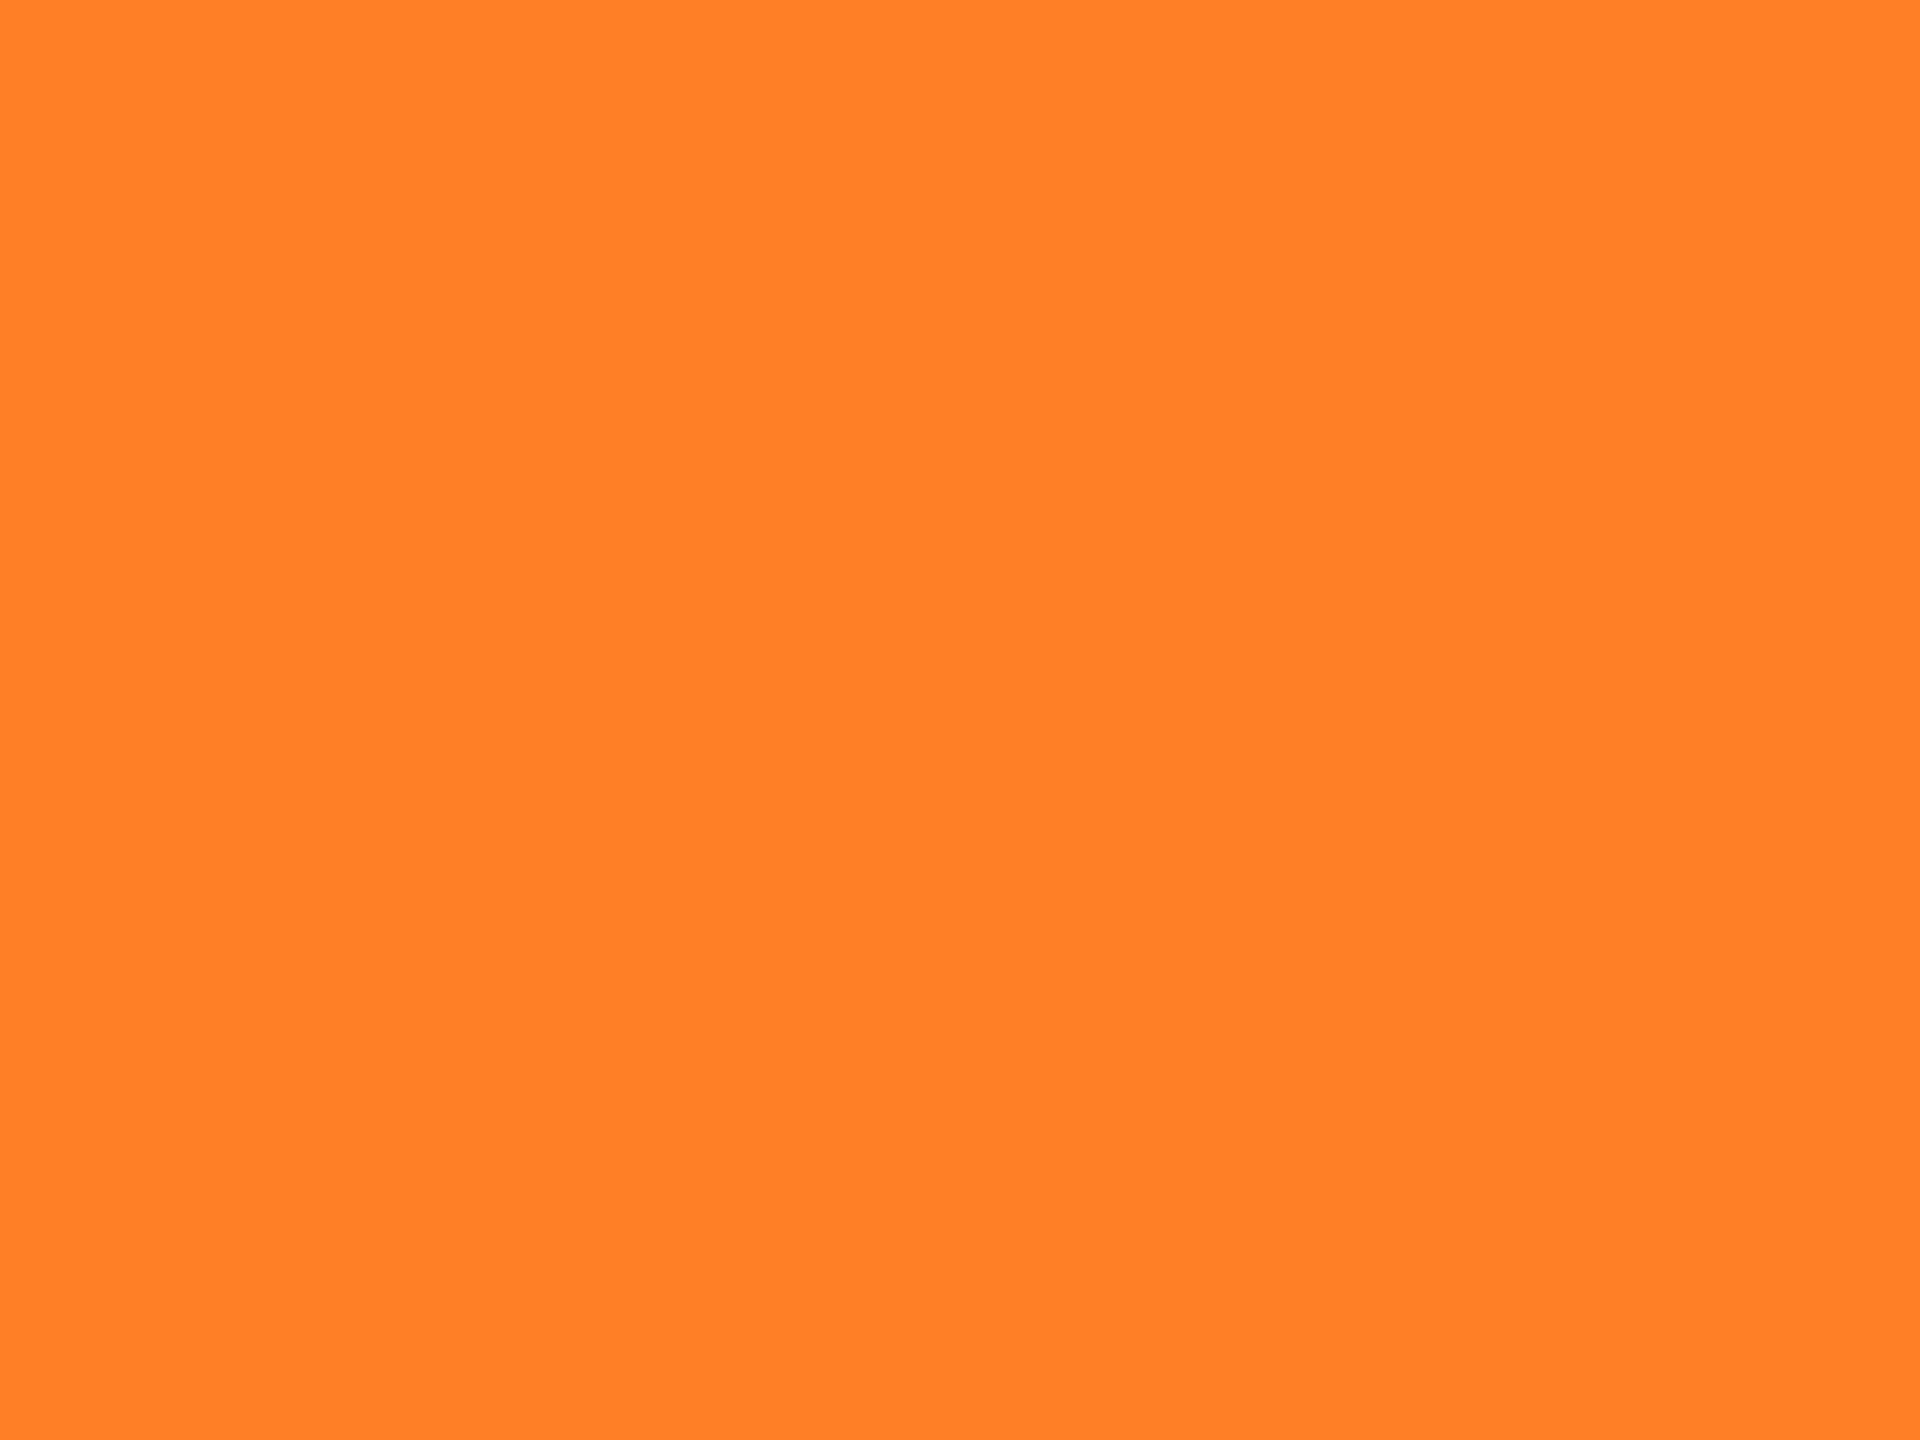 photo of an orange background